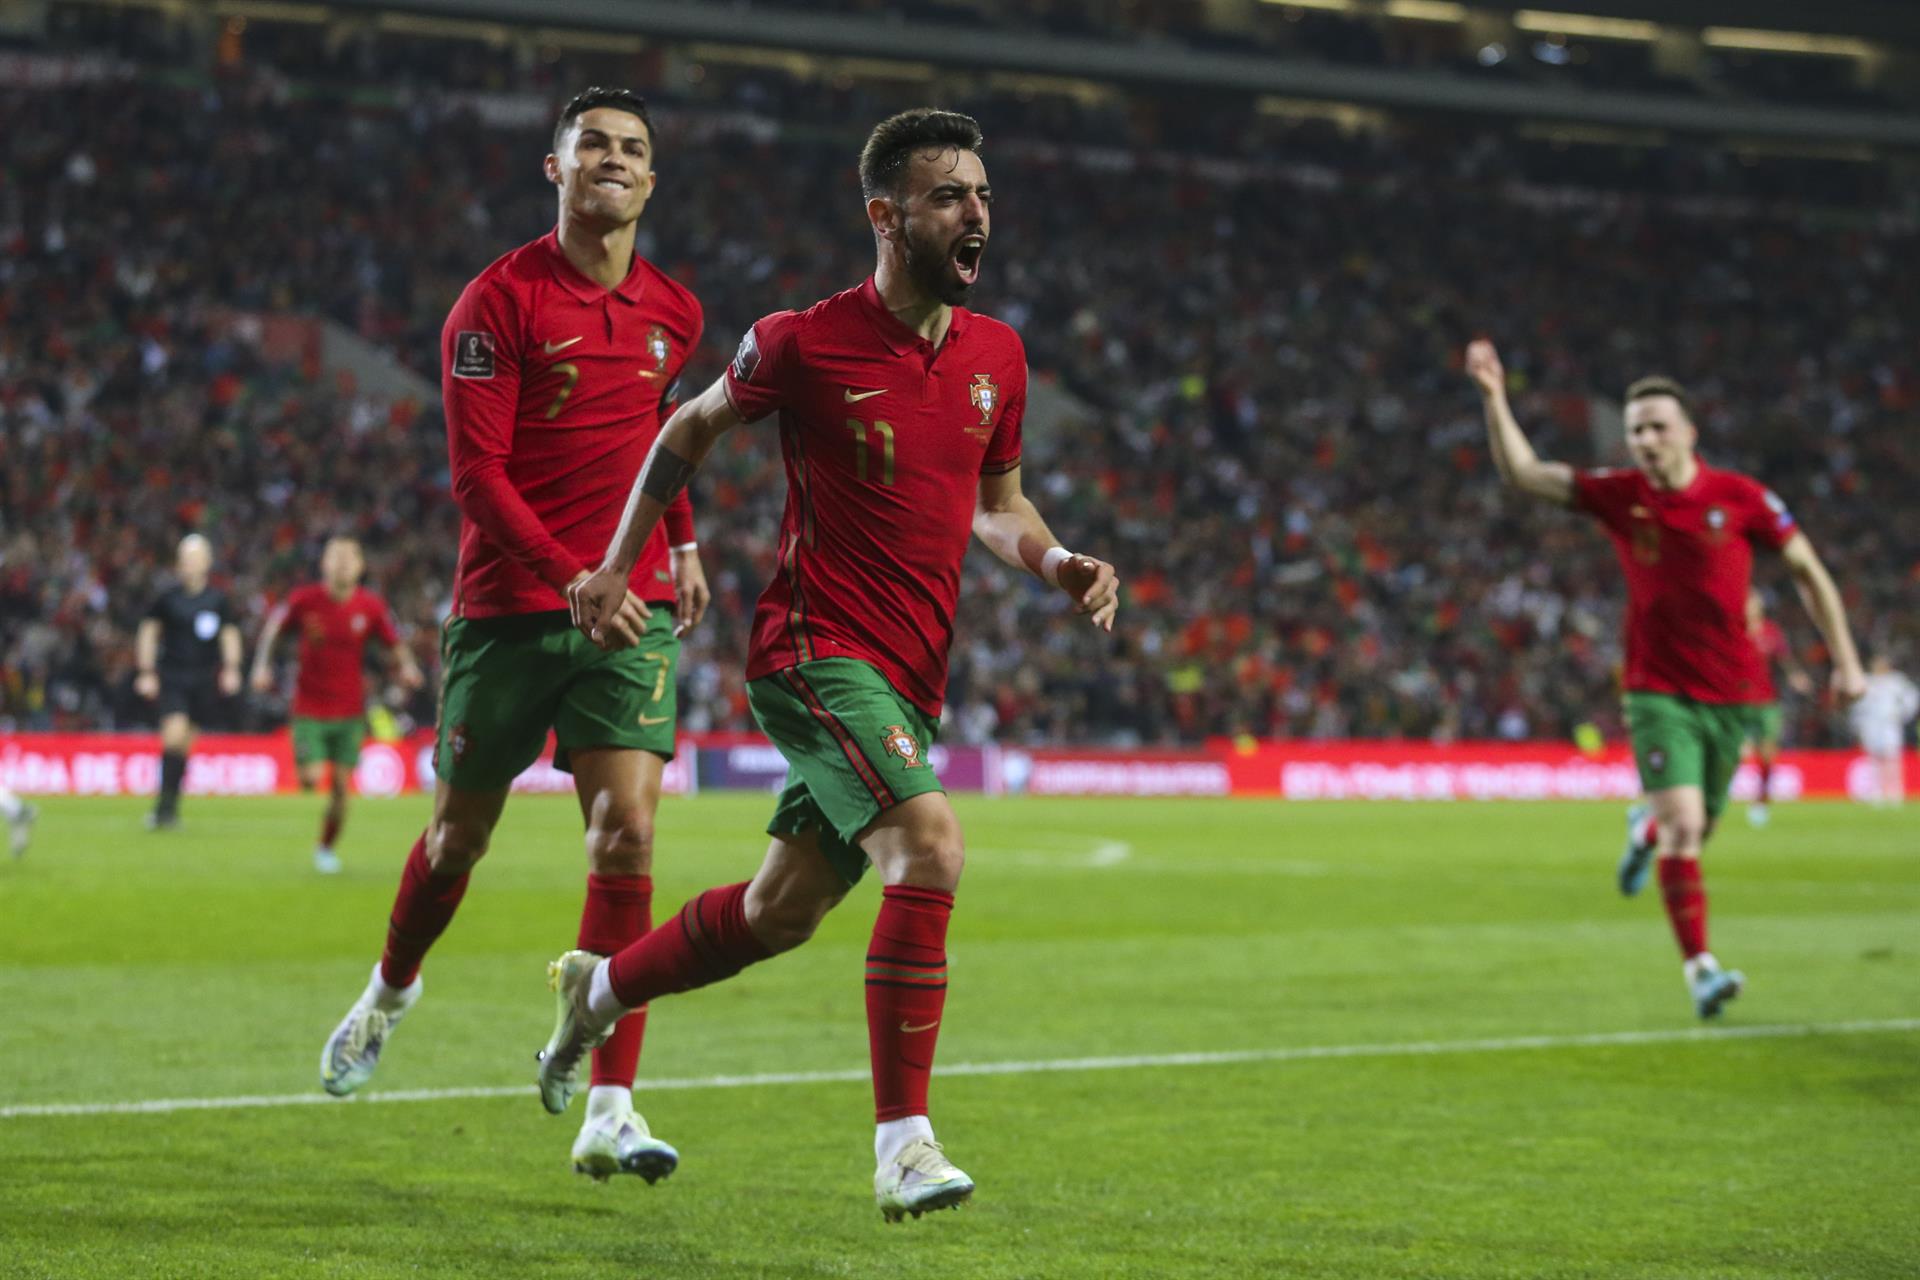 Bruno Fernandes comemora gol marcado por Portugal contra a Macedônia